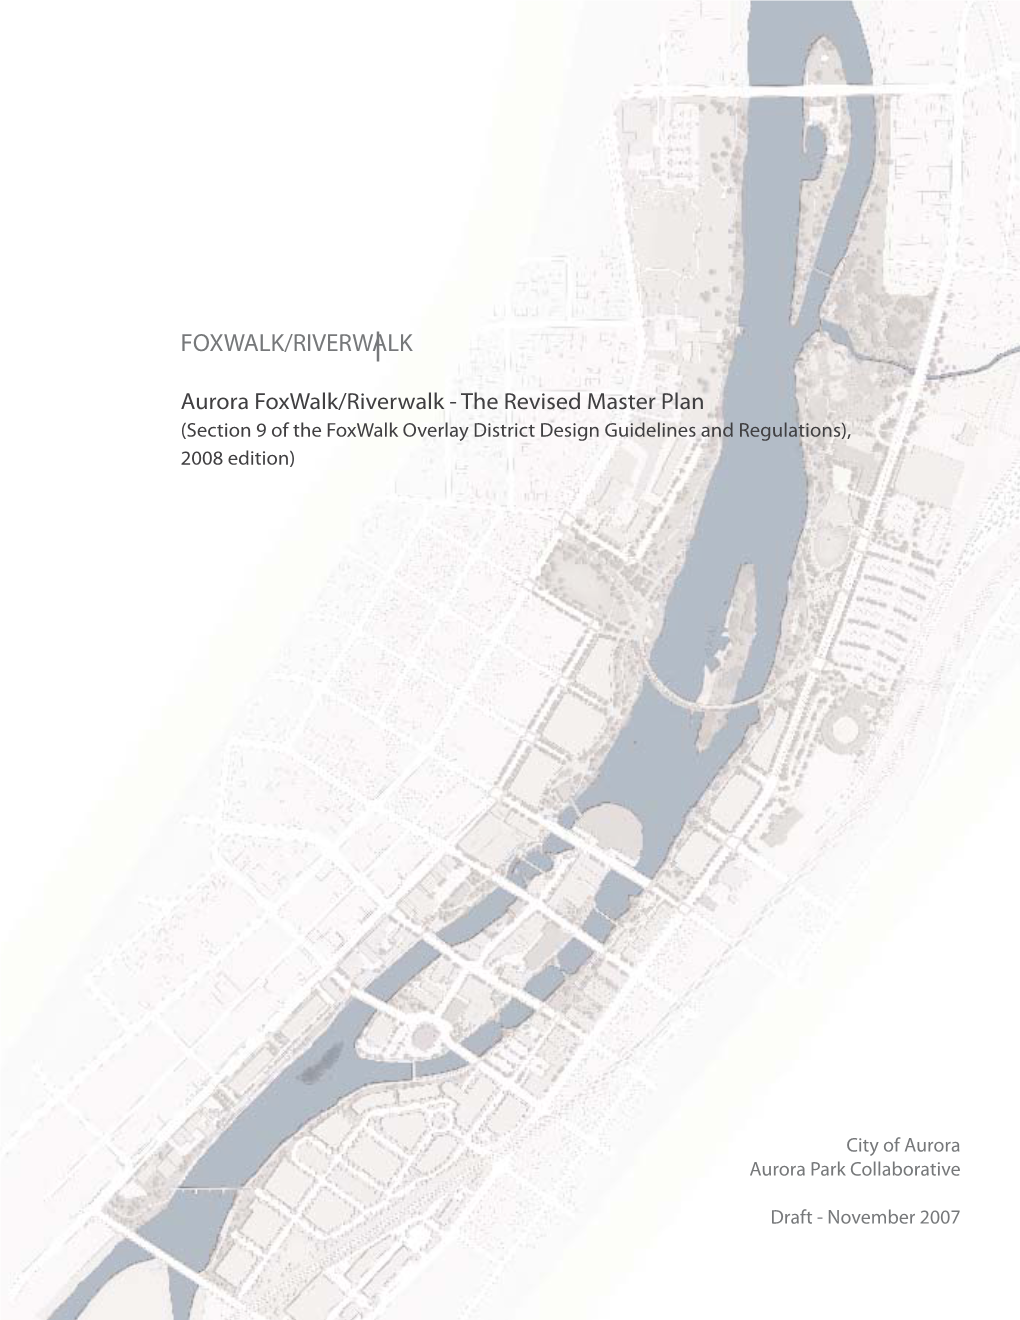 2007 Foxwalk/Riverwalk Master Plan